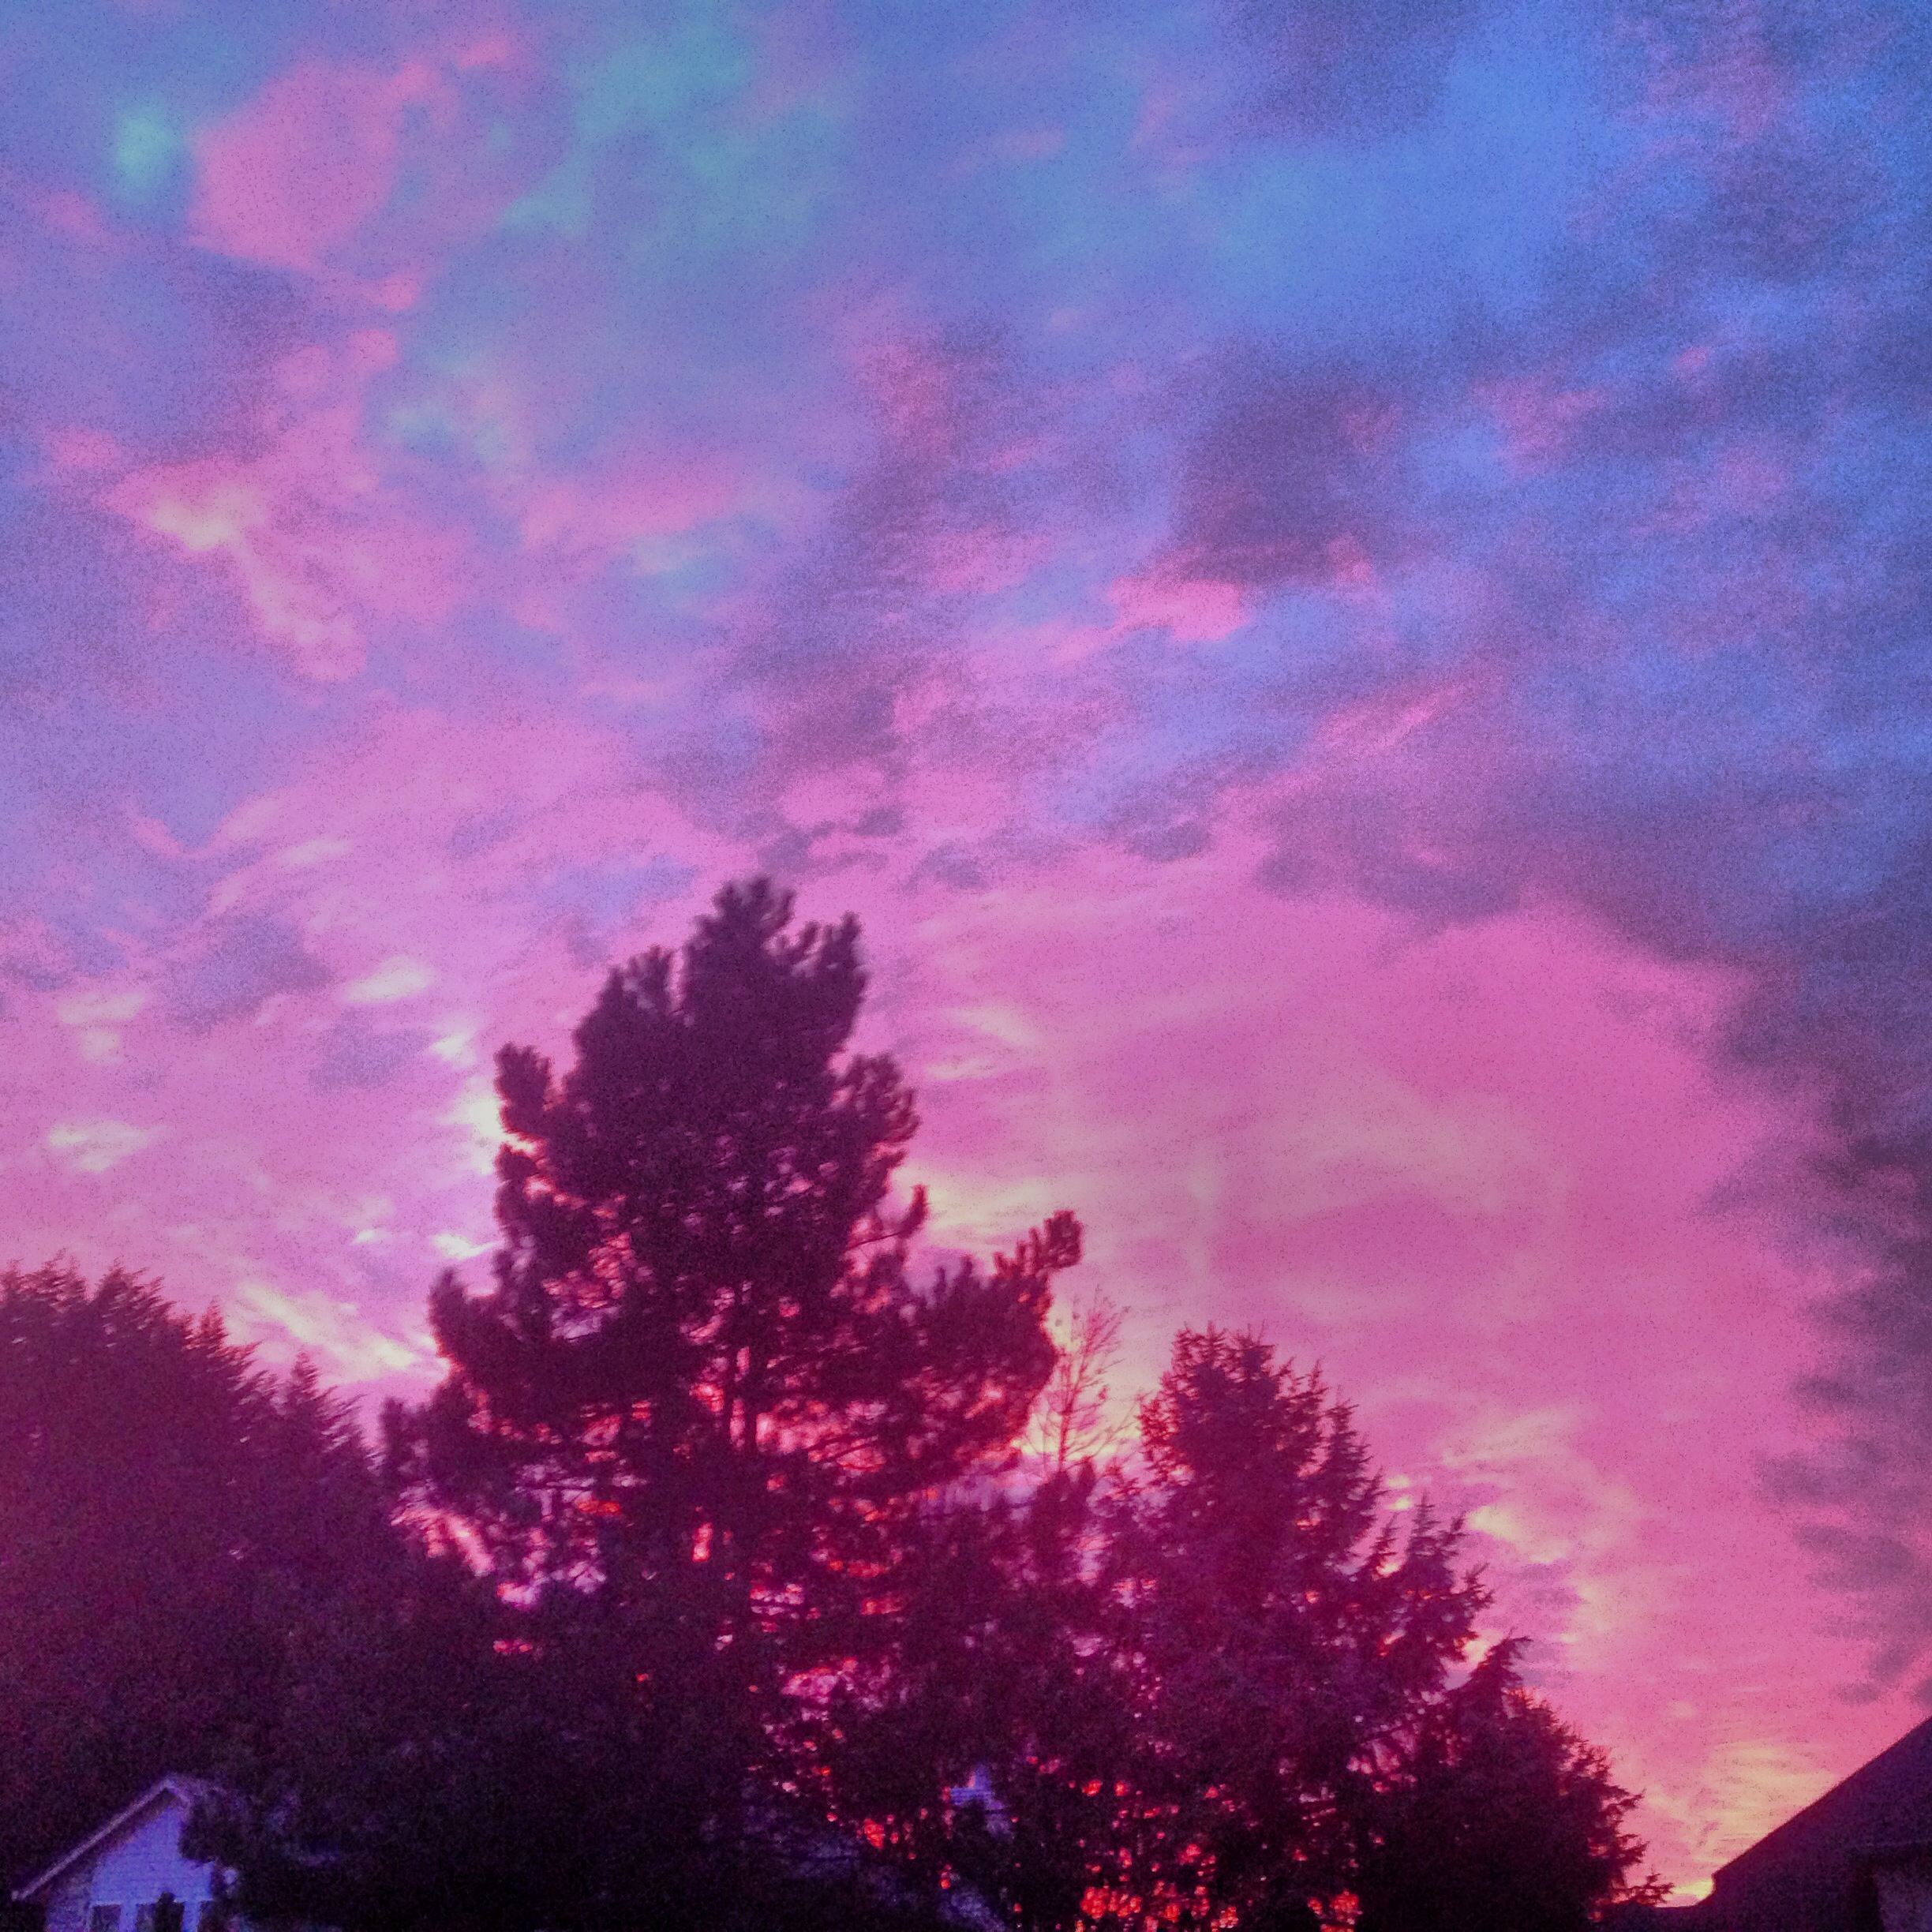 File:Pink sky.jpg - Wikimedia Commons